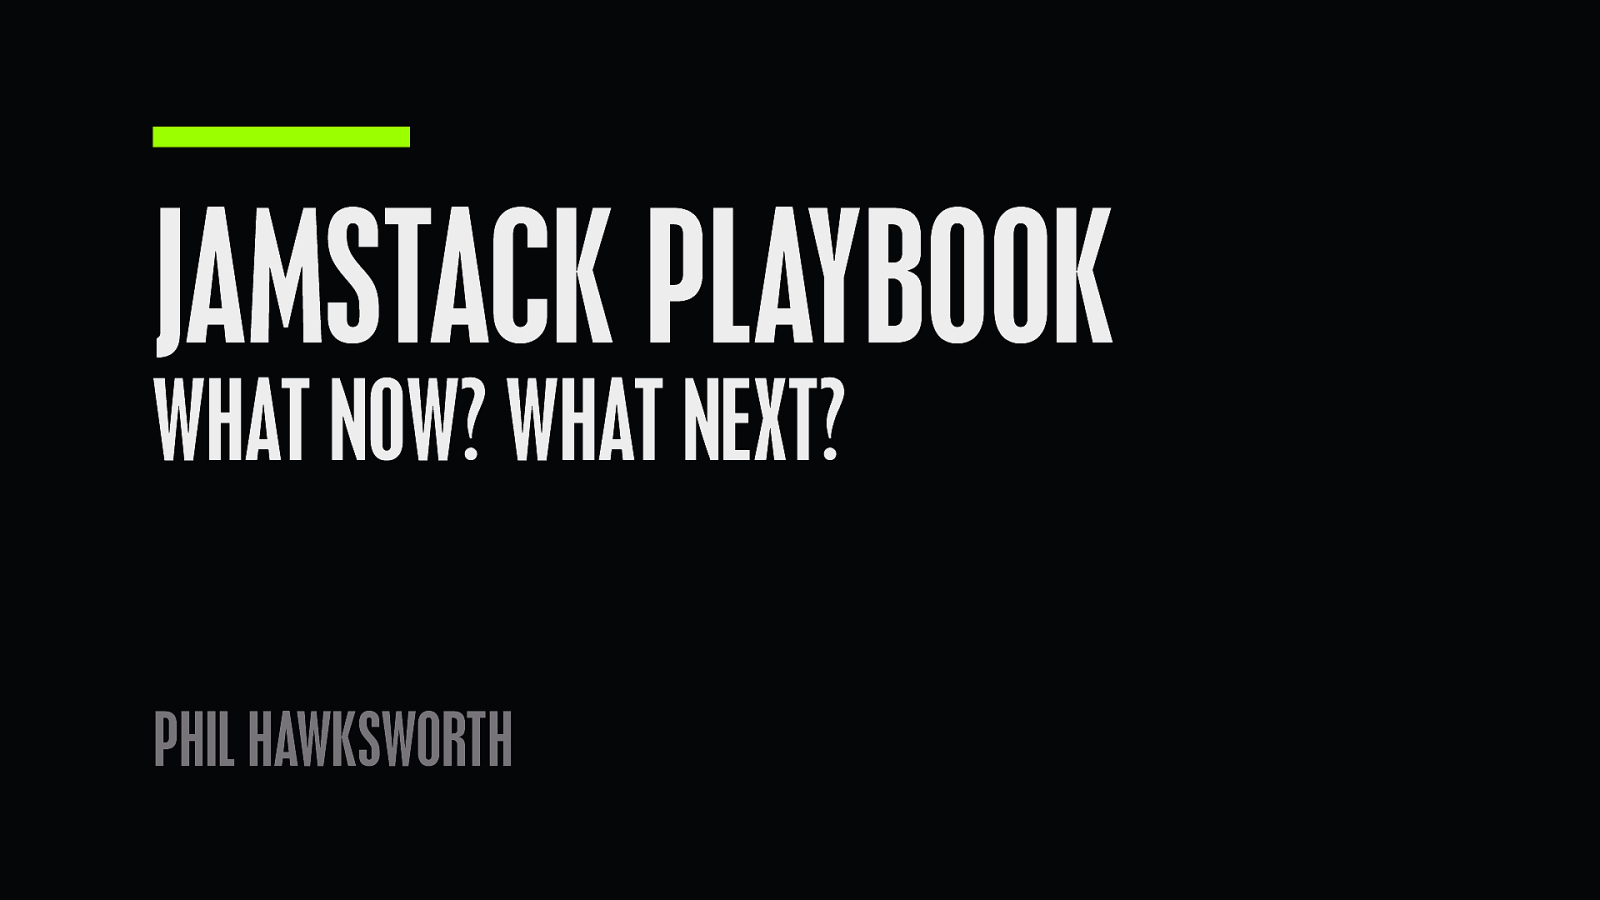 A JAMstack Playbook